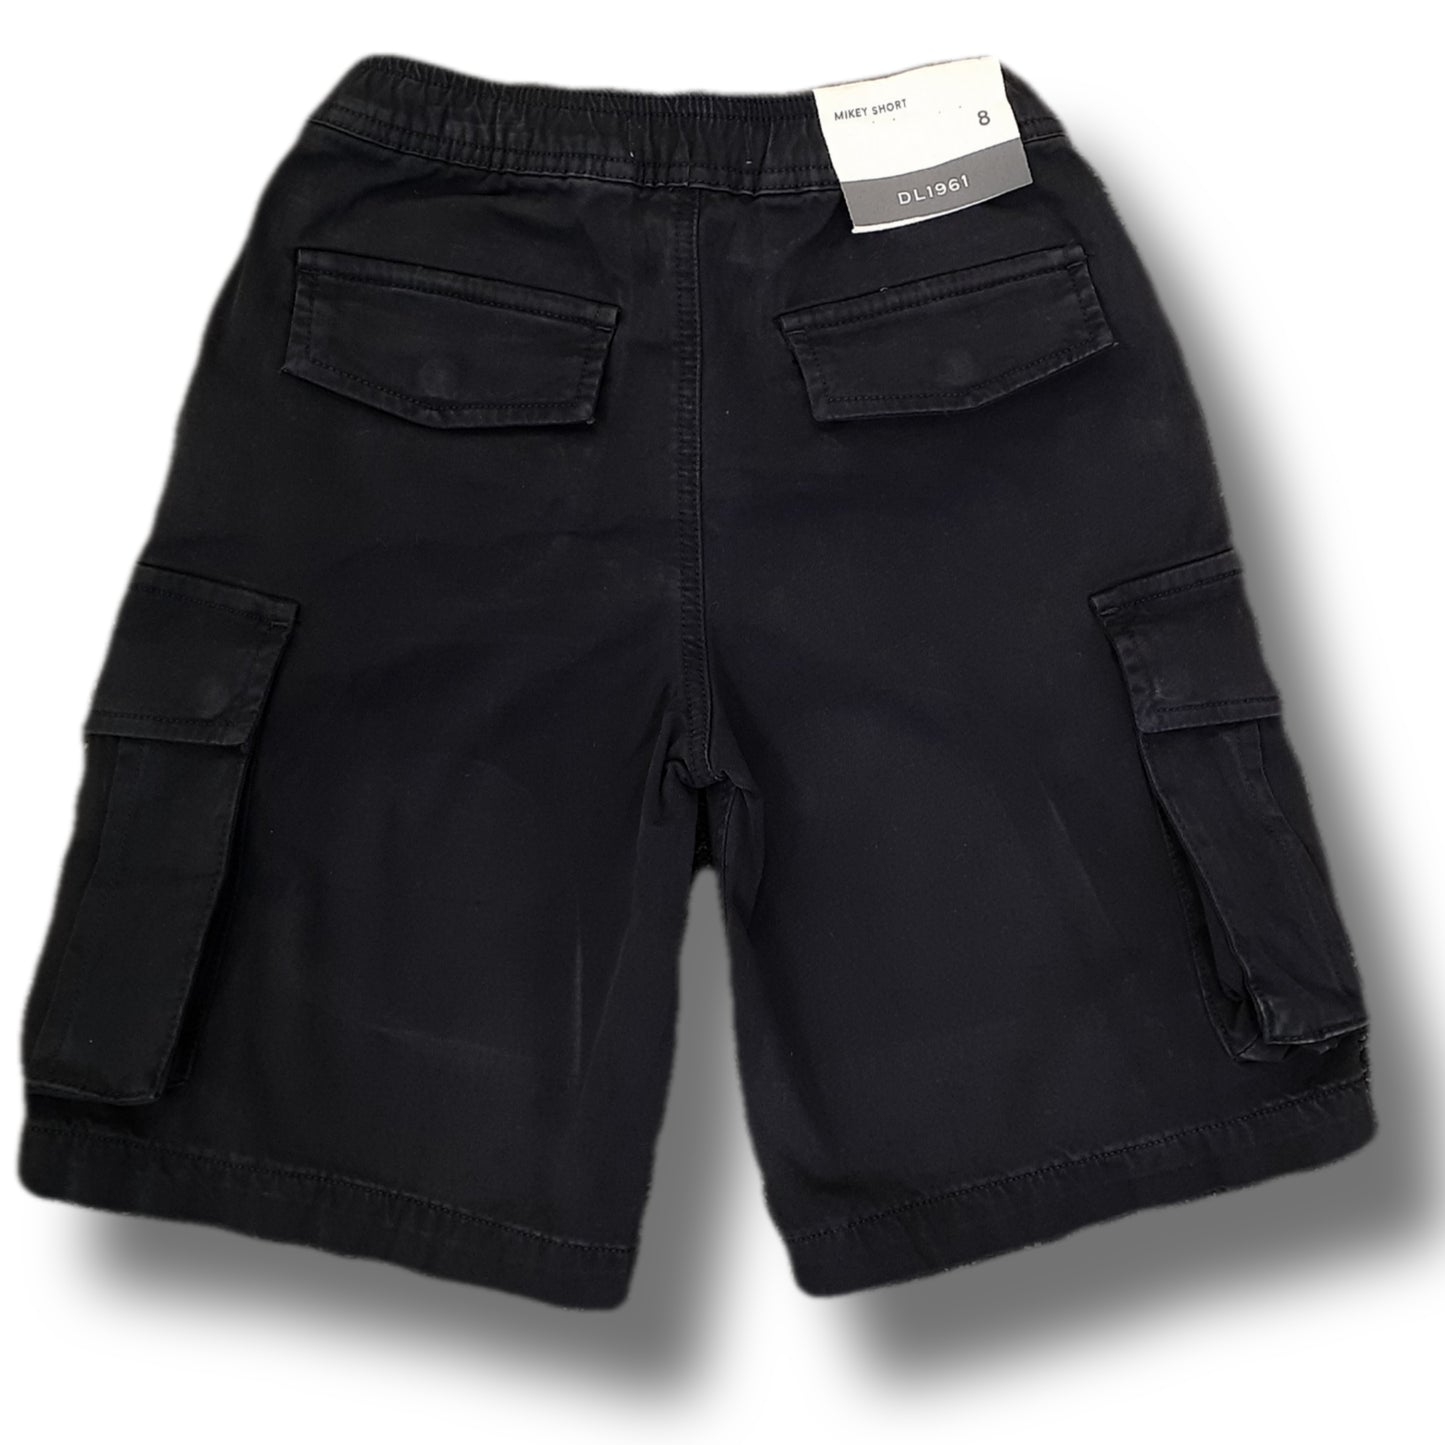 DL 1961 Boys Black Cargo shorts